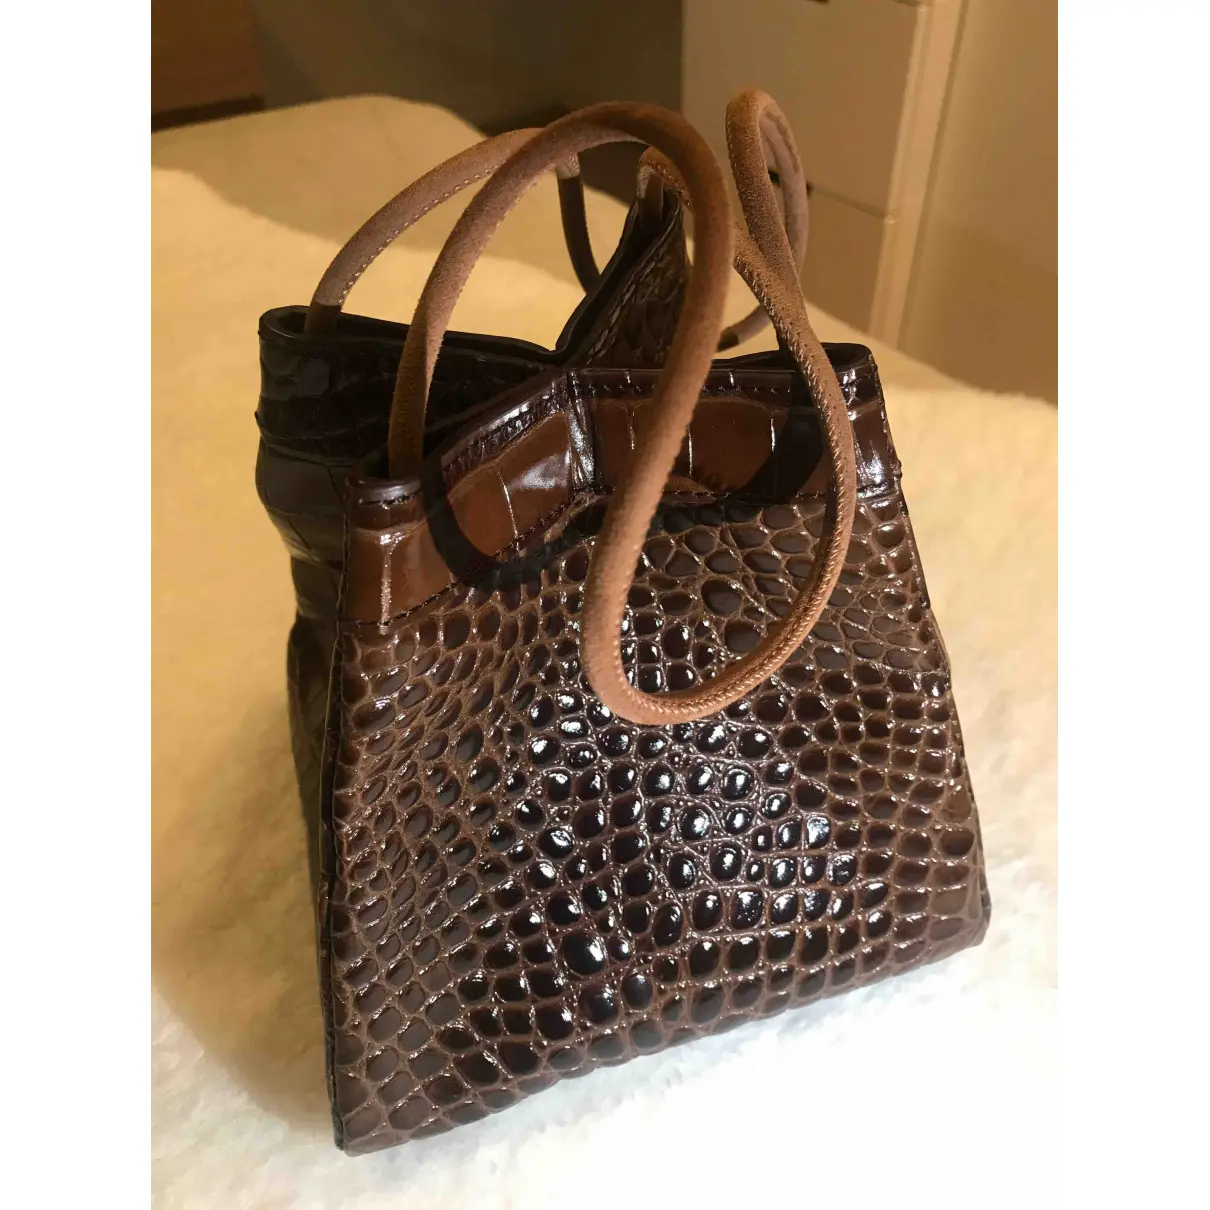 Buy Rejina Pyo Leather handbag online